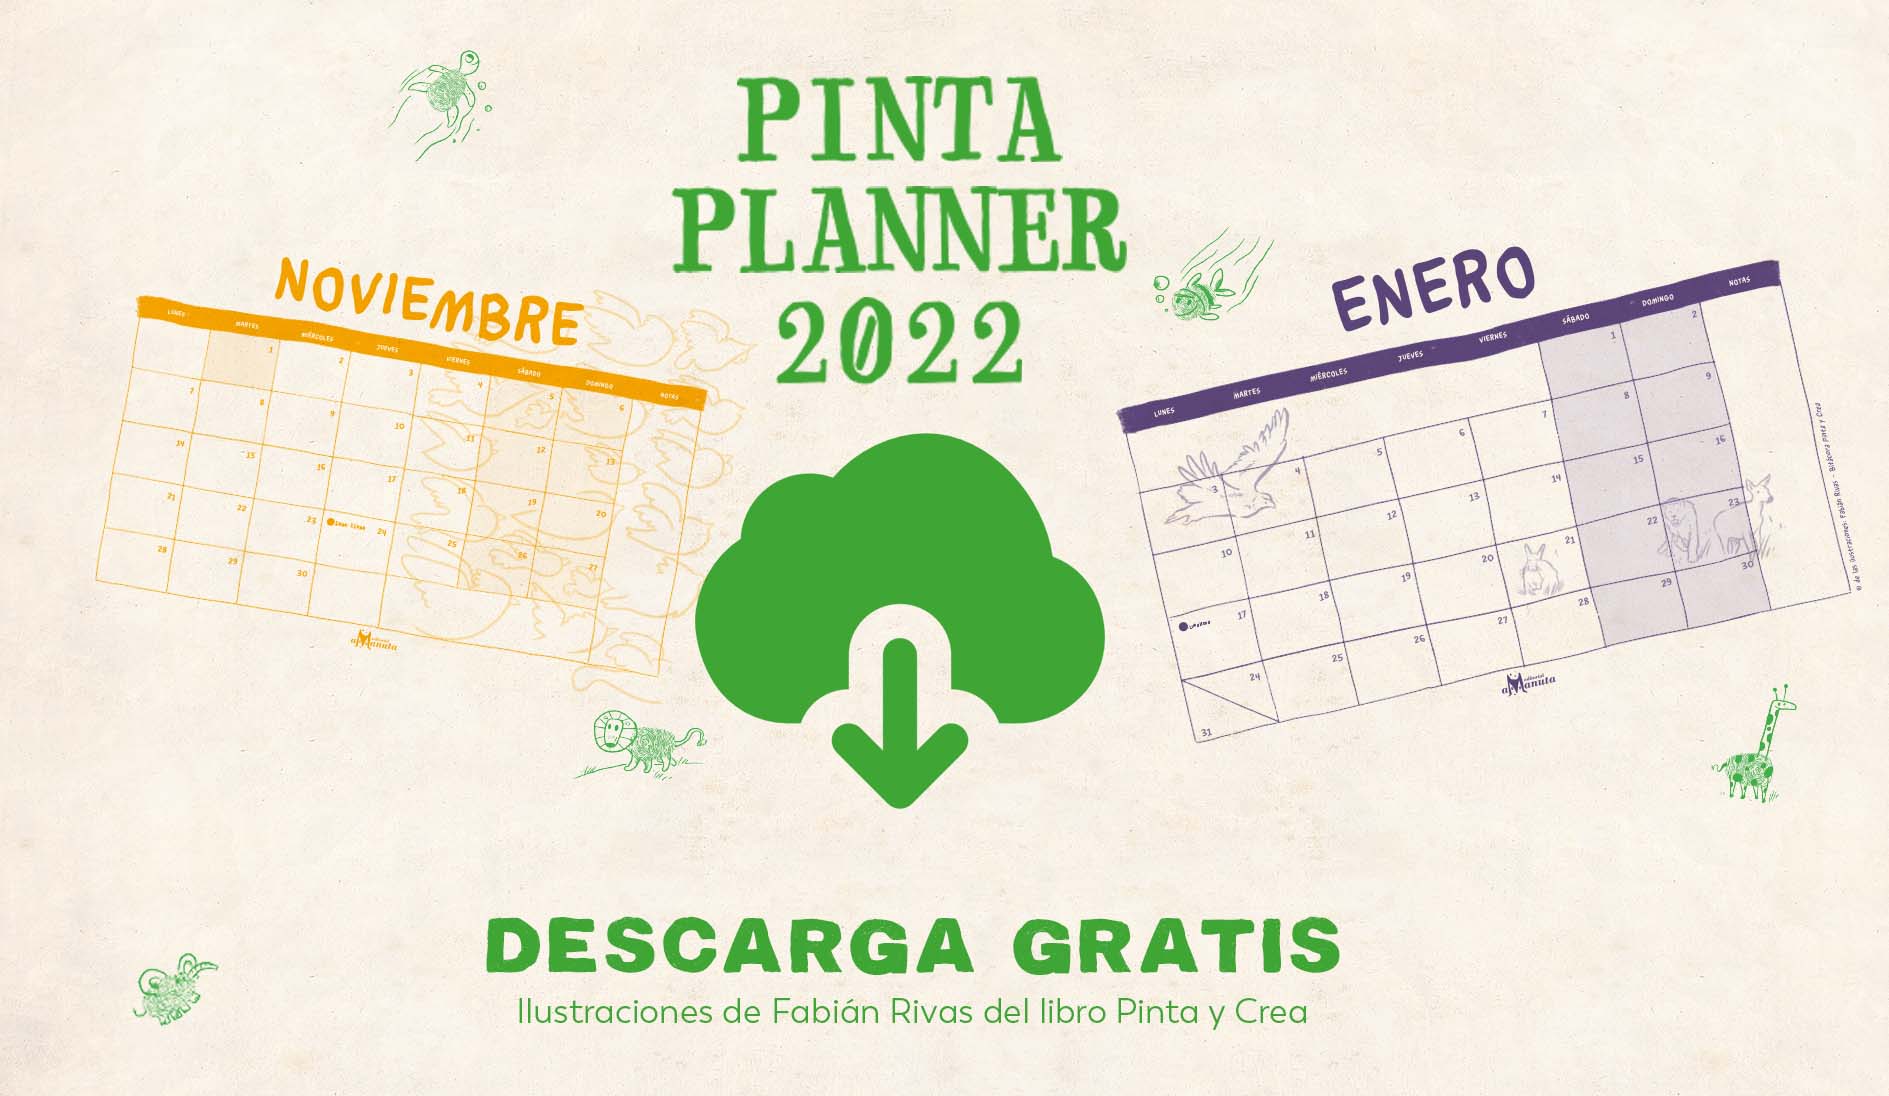 PINTA PLANNER 2022